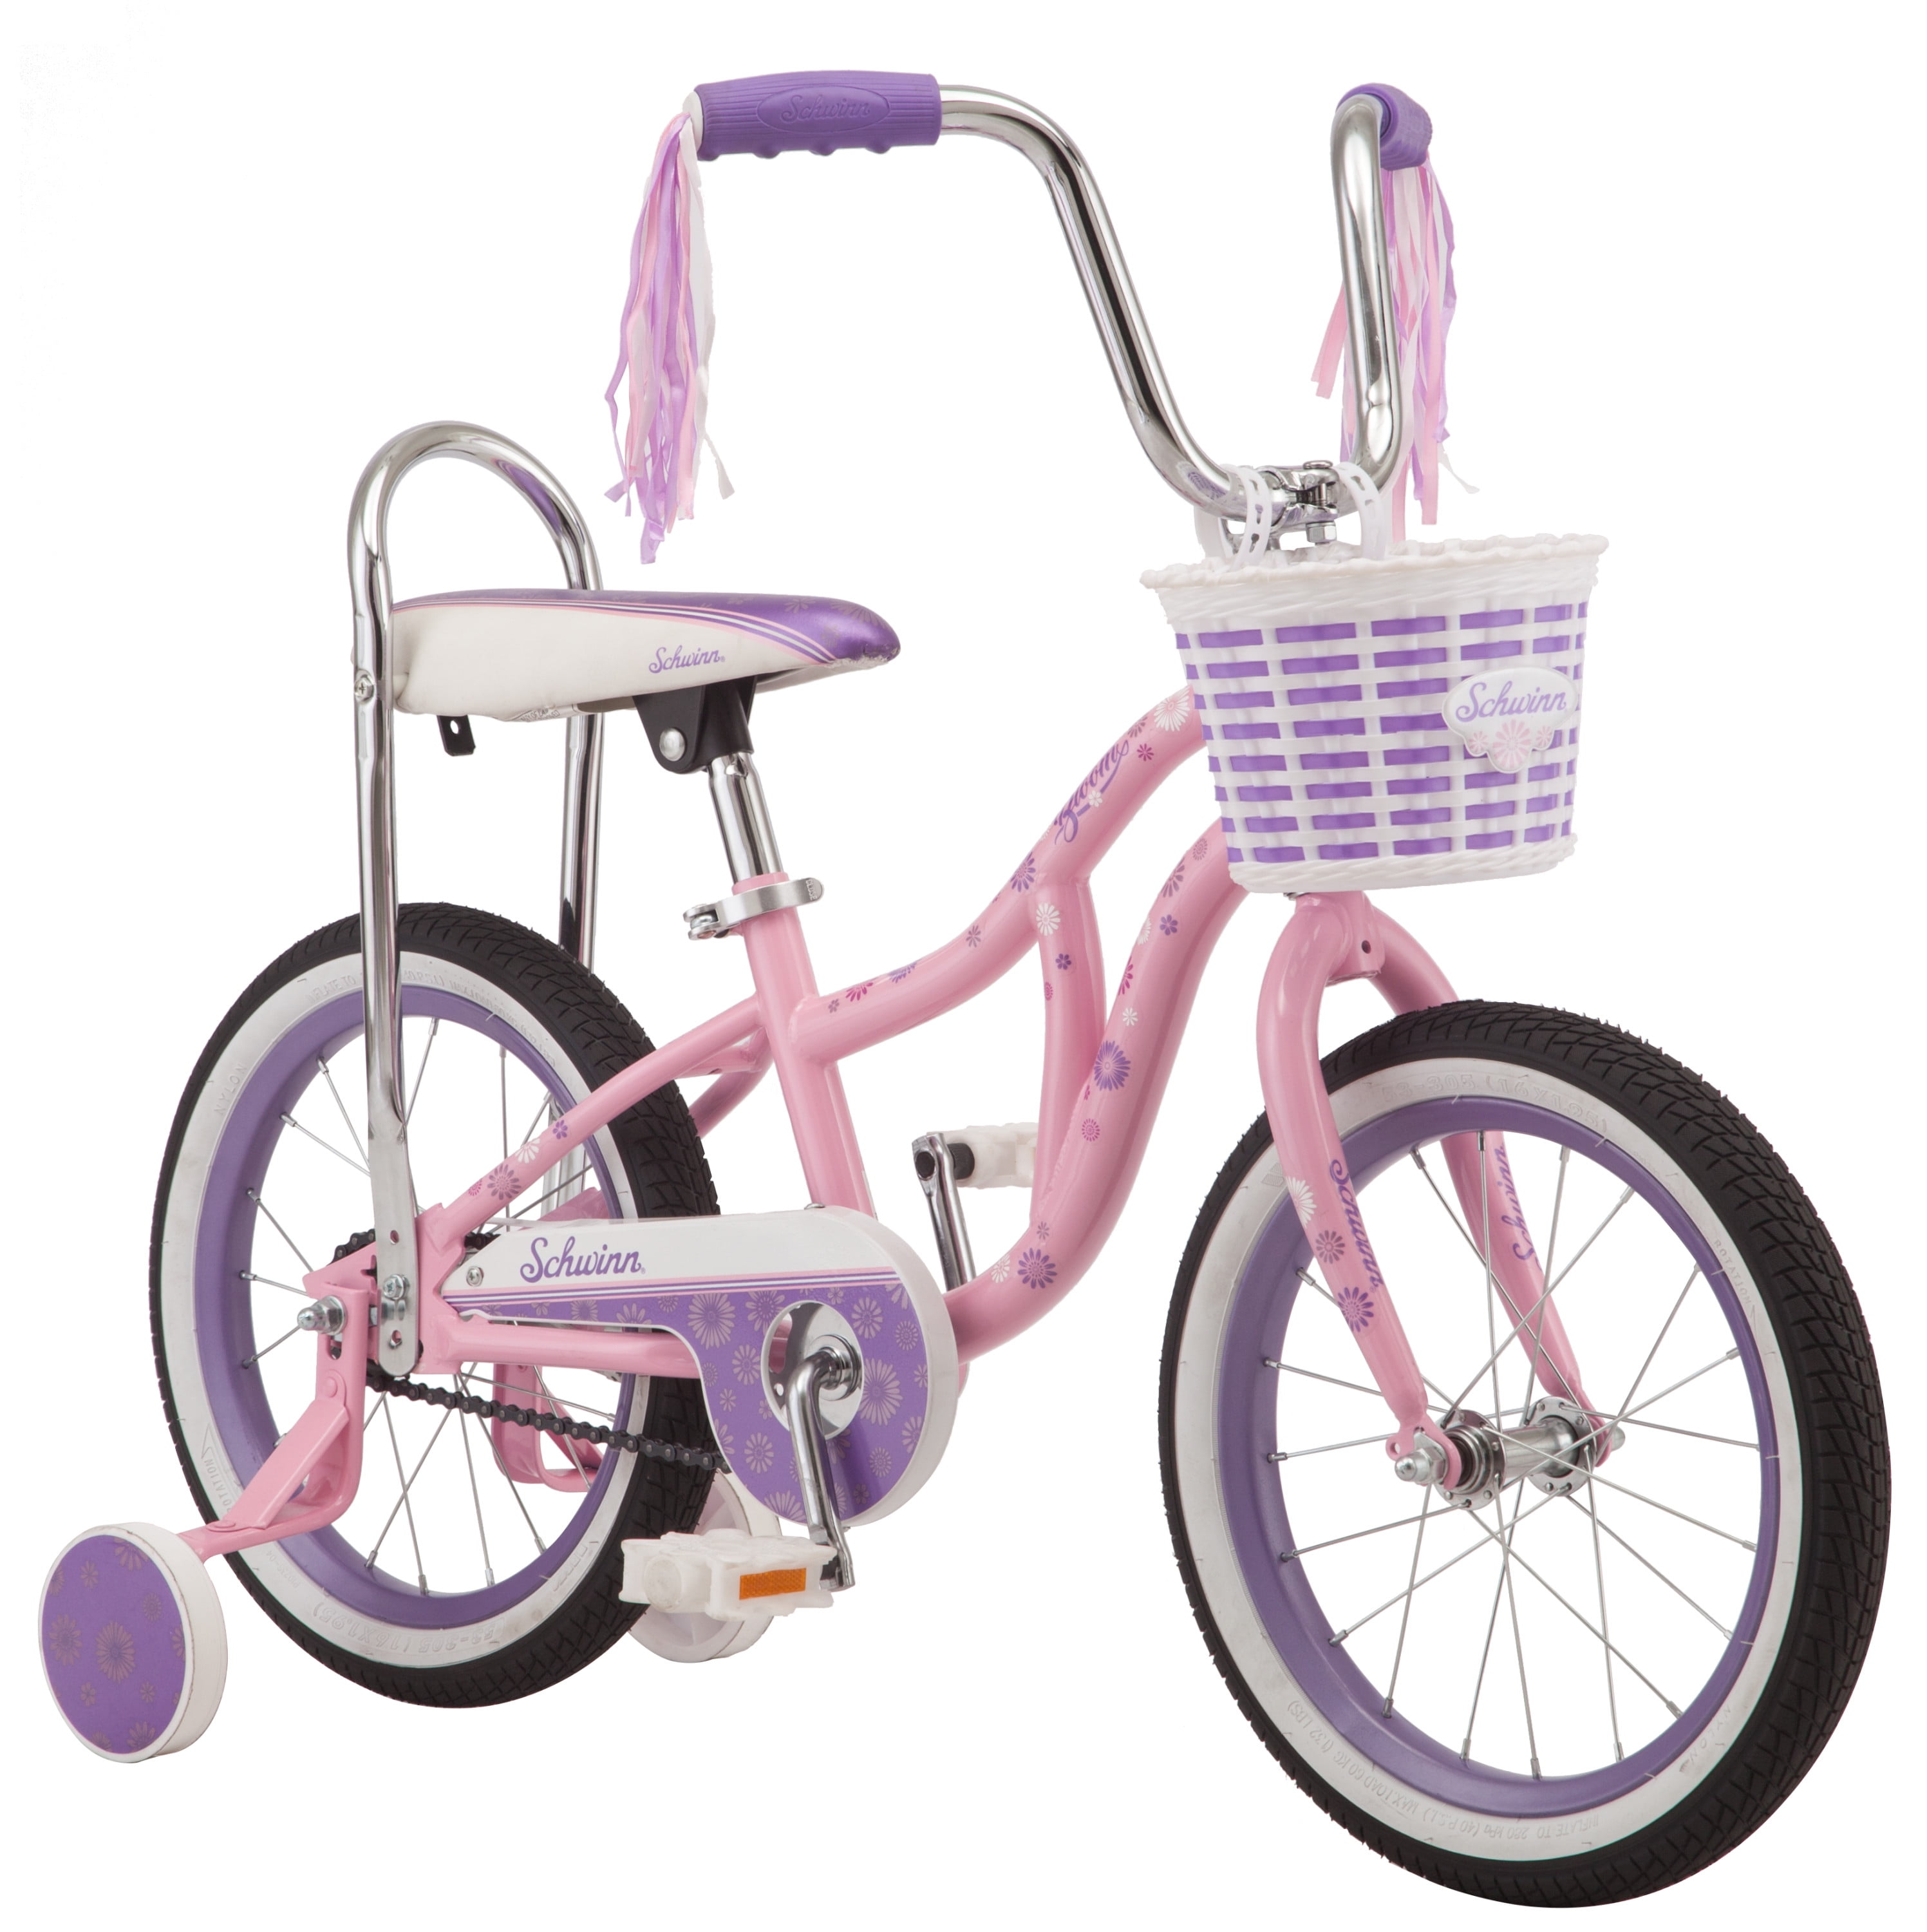 12"/16" Bicycle Basket Black/White With 3 Flowers Kids Child Bike Basket 